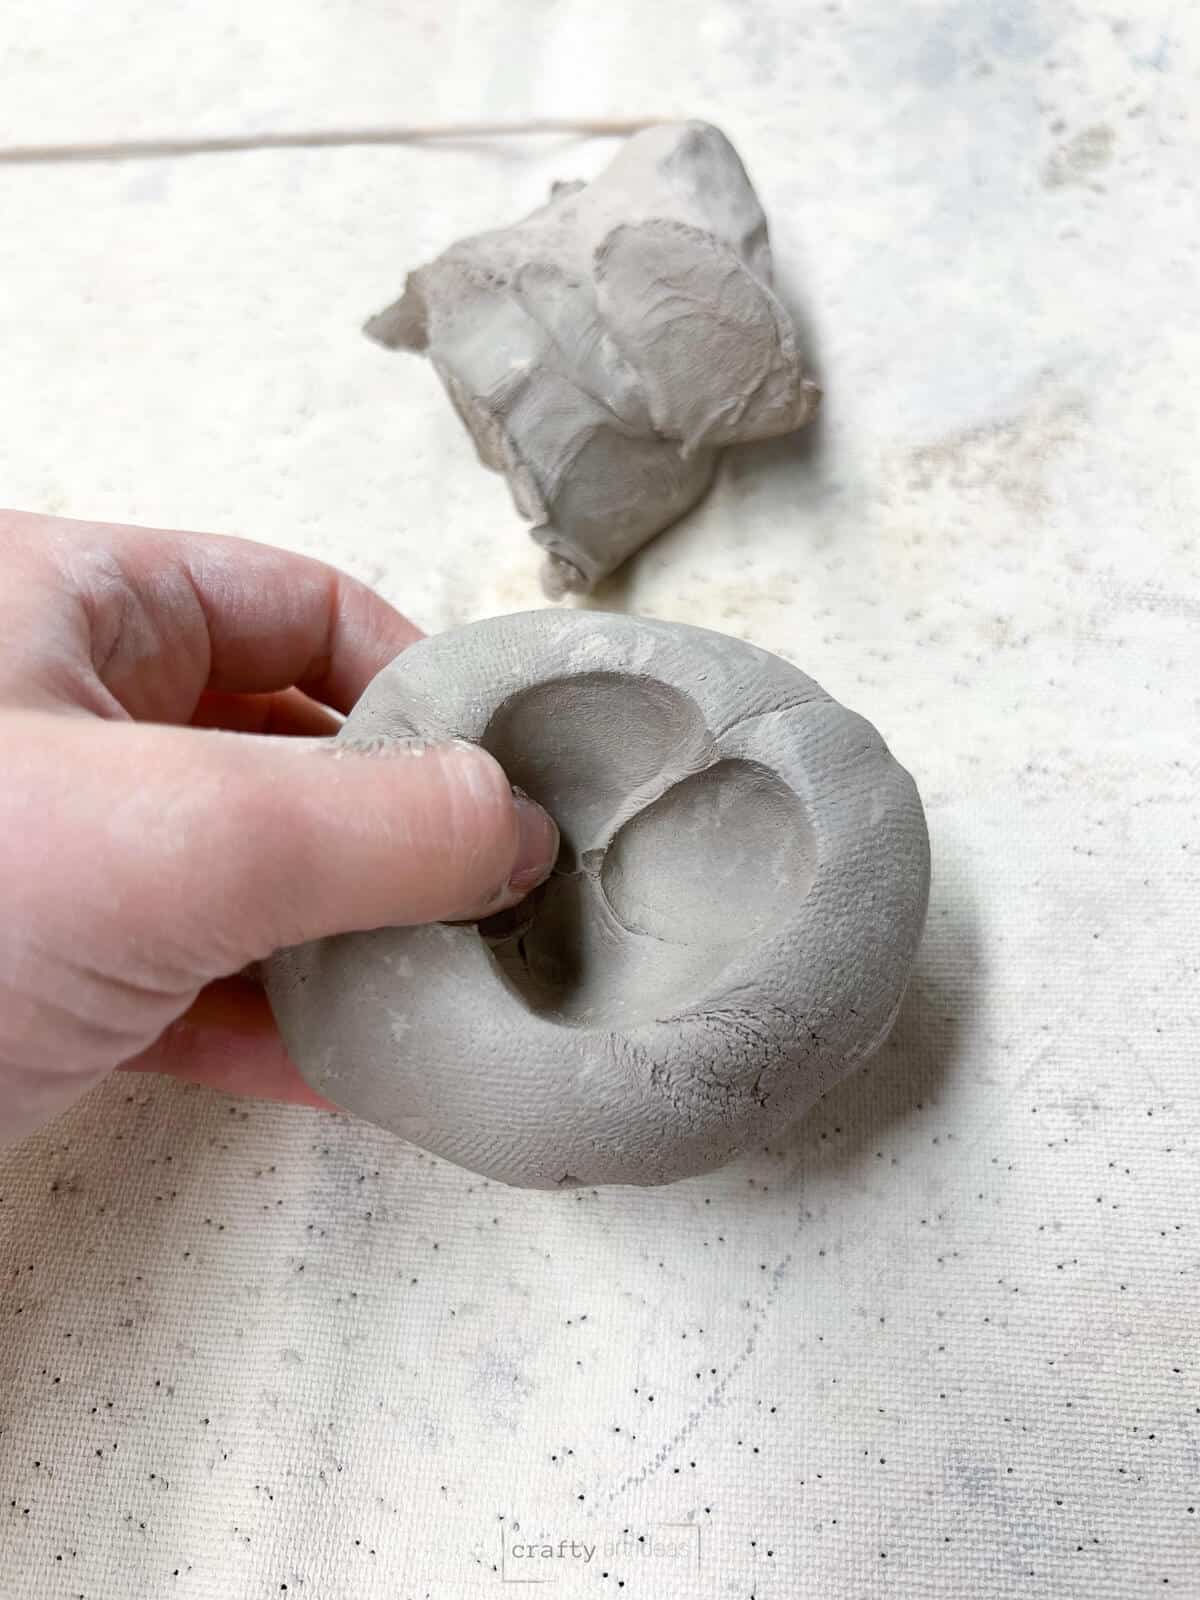 thumb pushing in 4 thumbprints in clay ball to start making pinch pot.